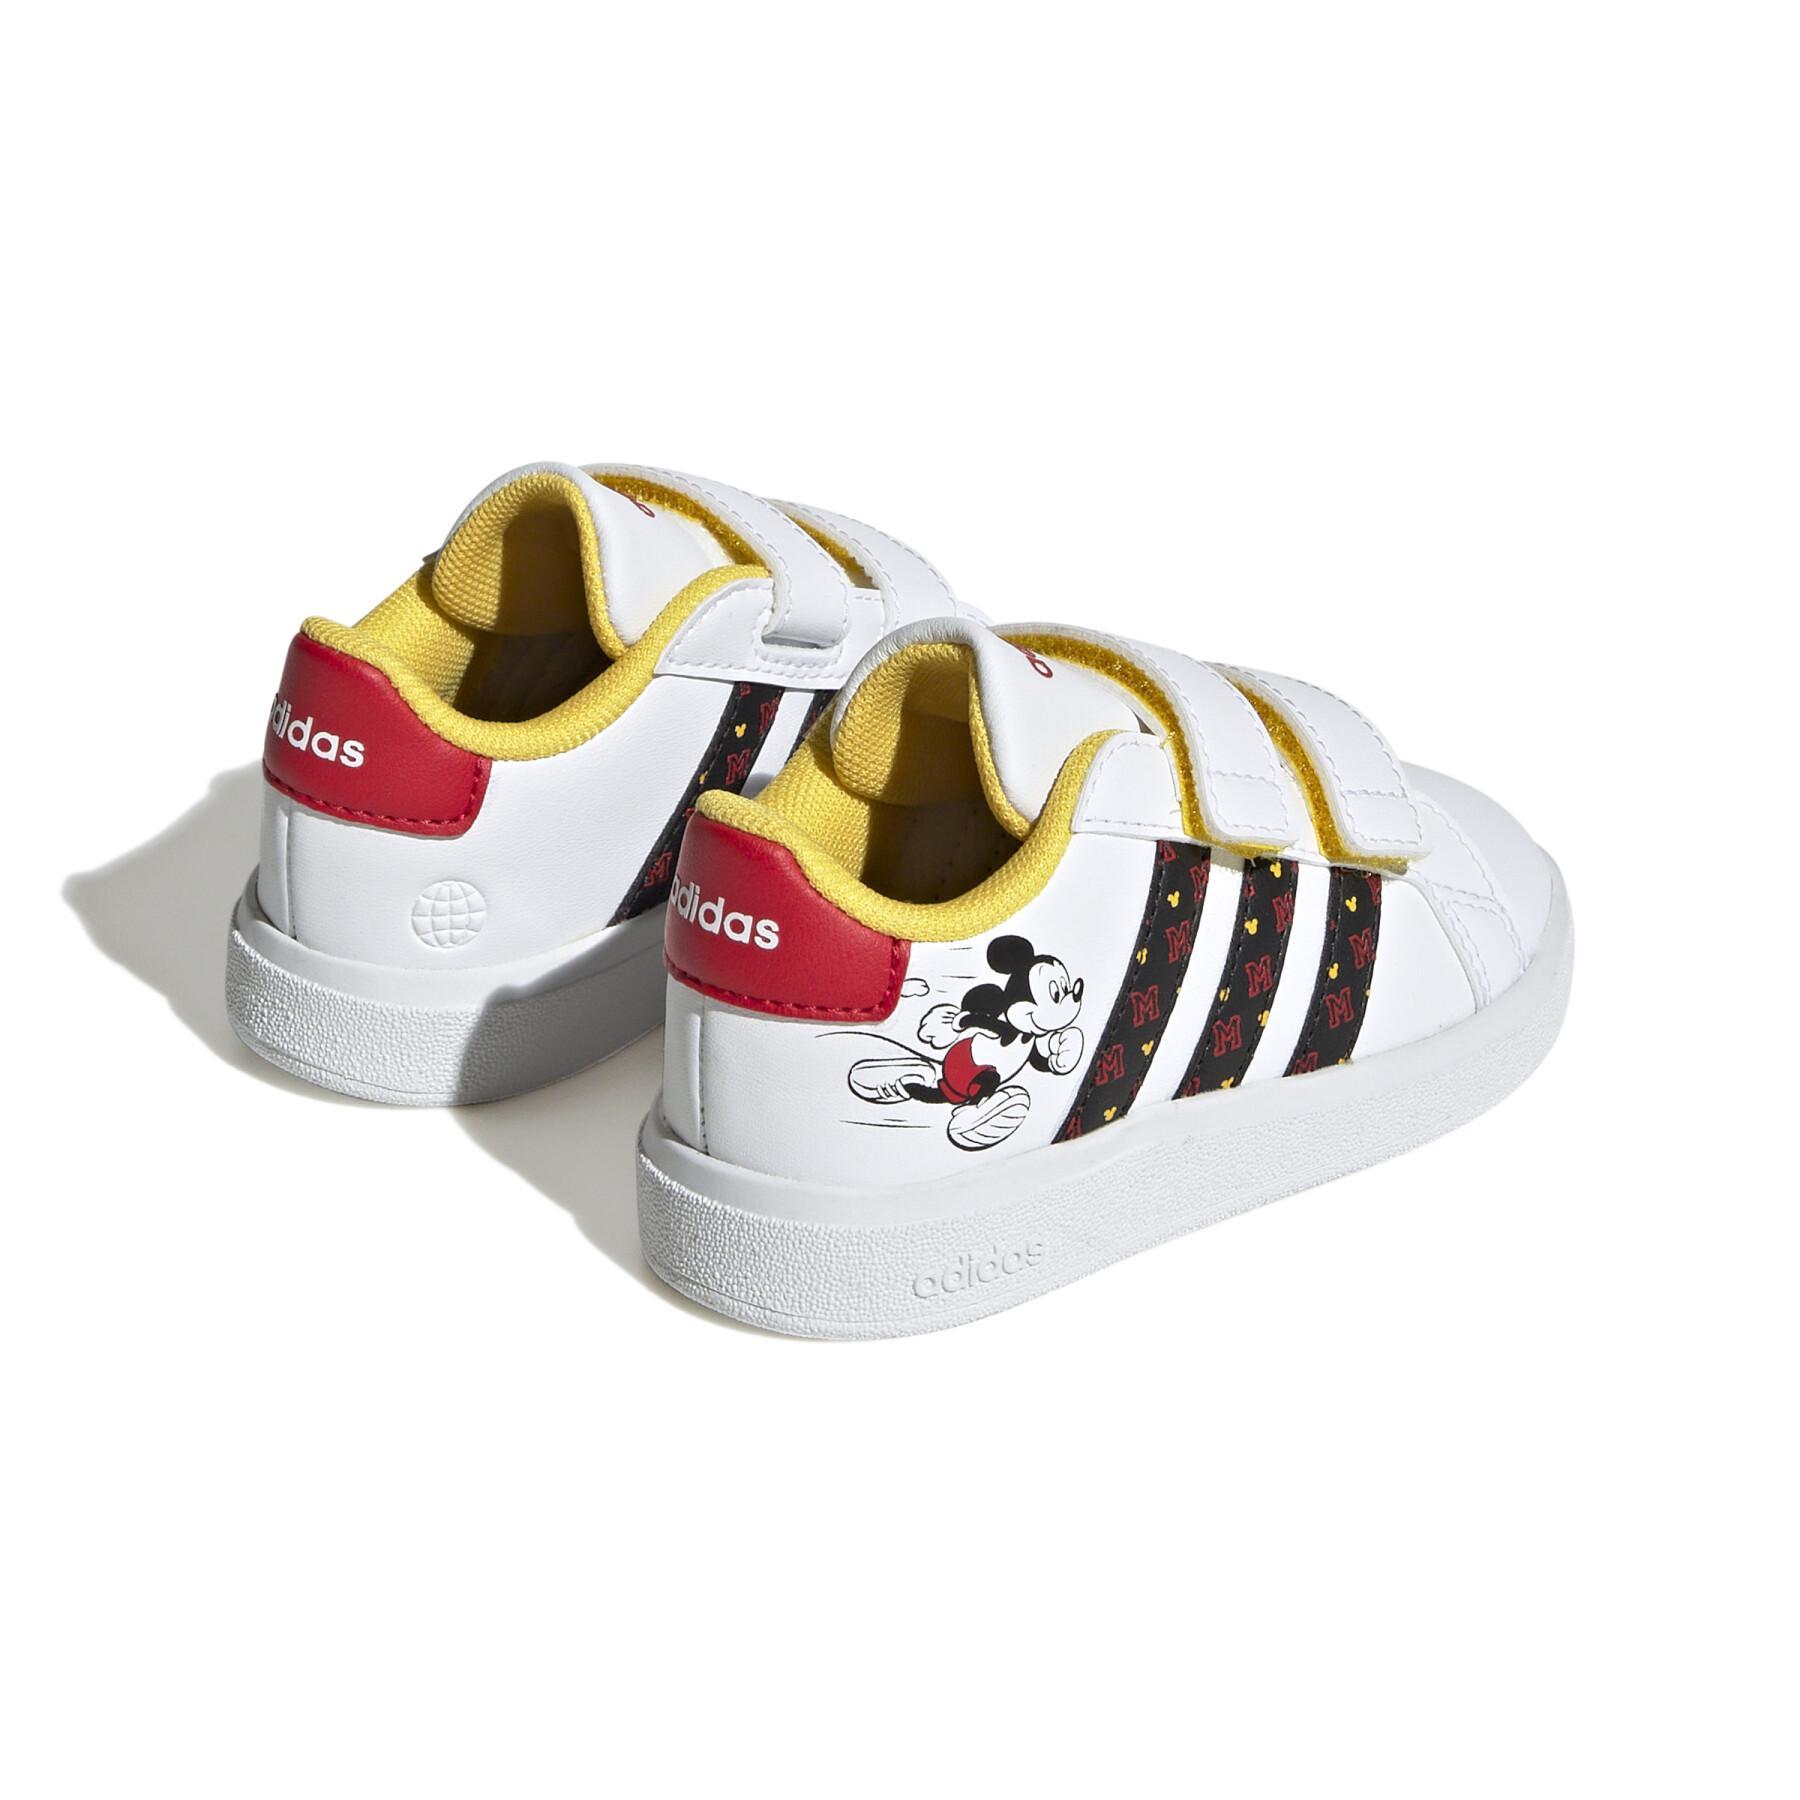 Sneakers mit Klettverschluss, Baby adidas X Disney Grand Court Mickey -  Sneakers Kinder - Lifestyle